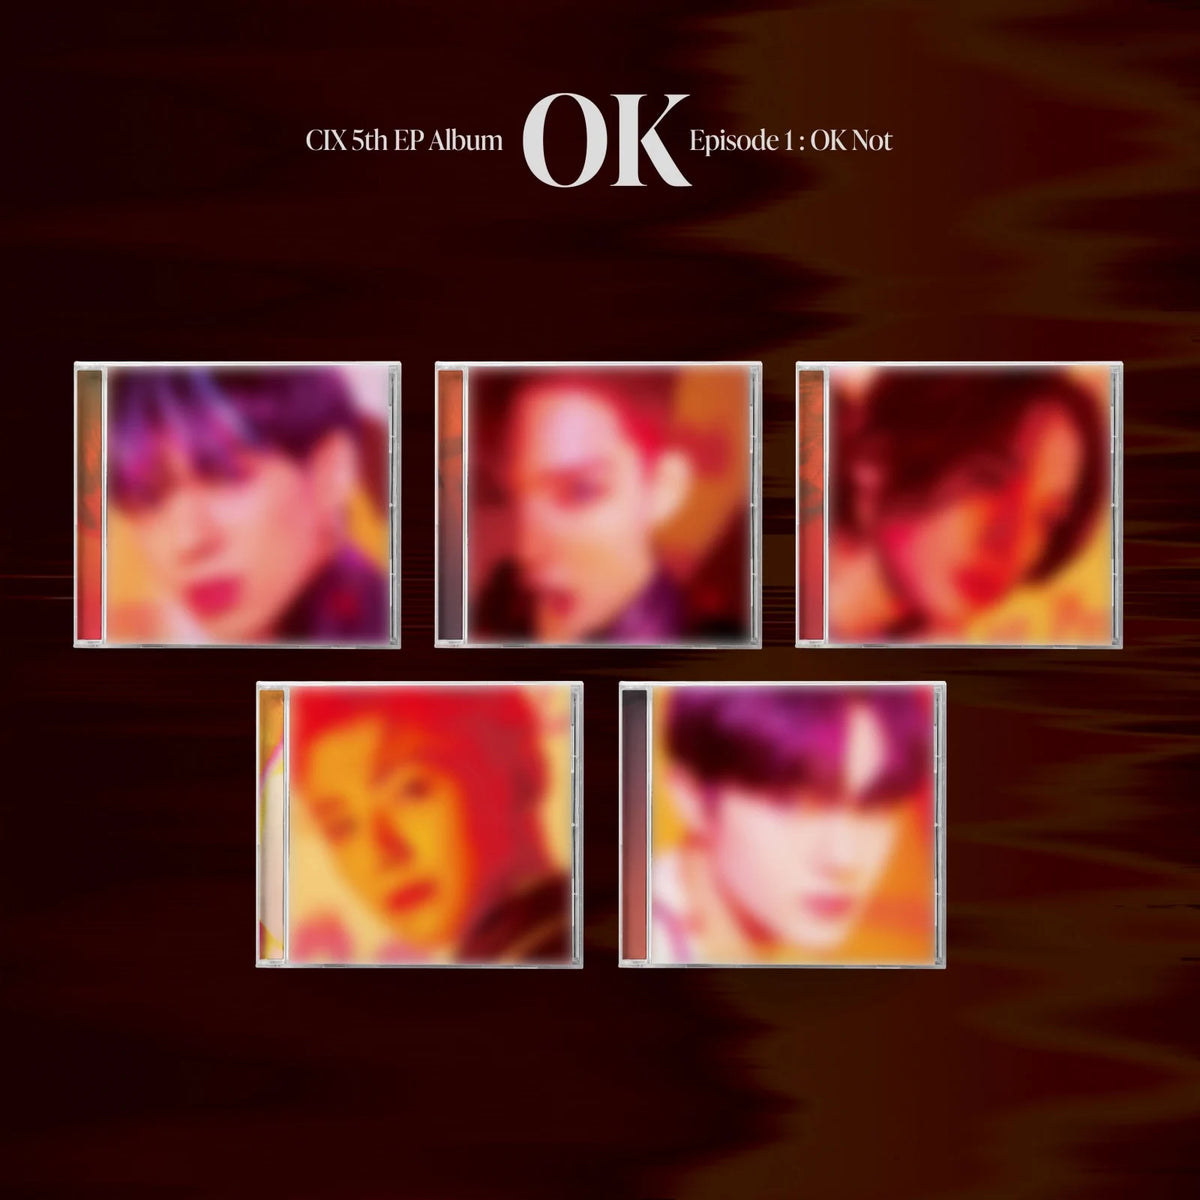 CIX - 5th EP Album ['OK' Episode 1 : OK Not] [JEWEL CASE]